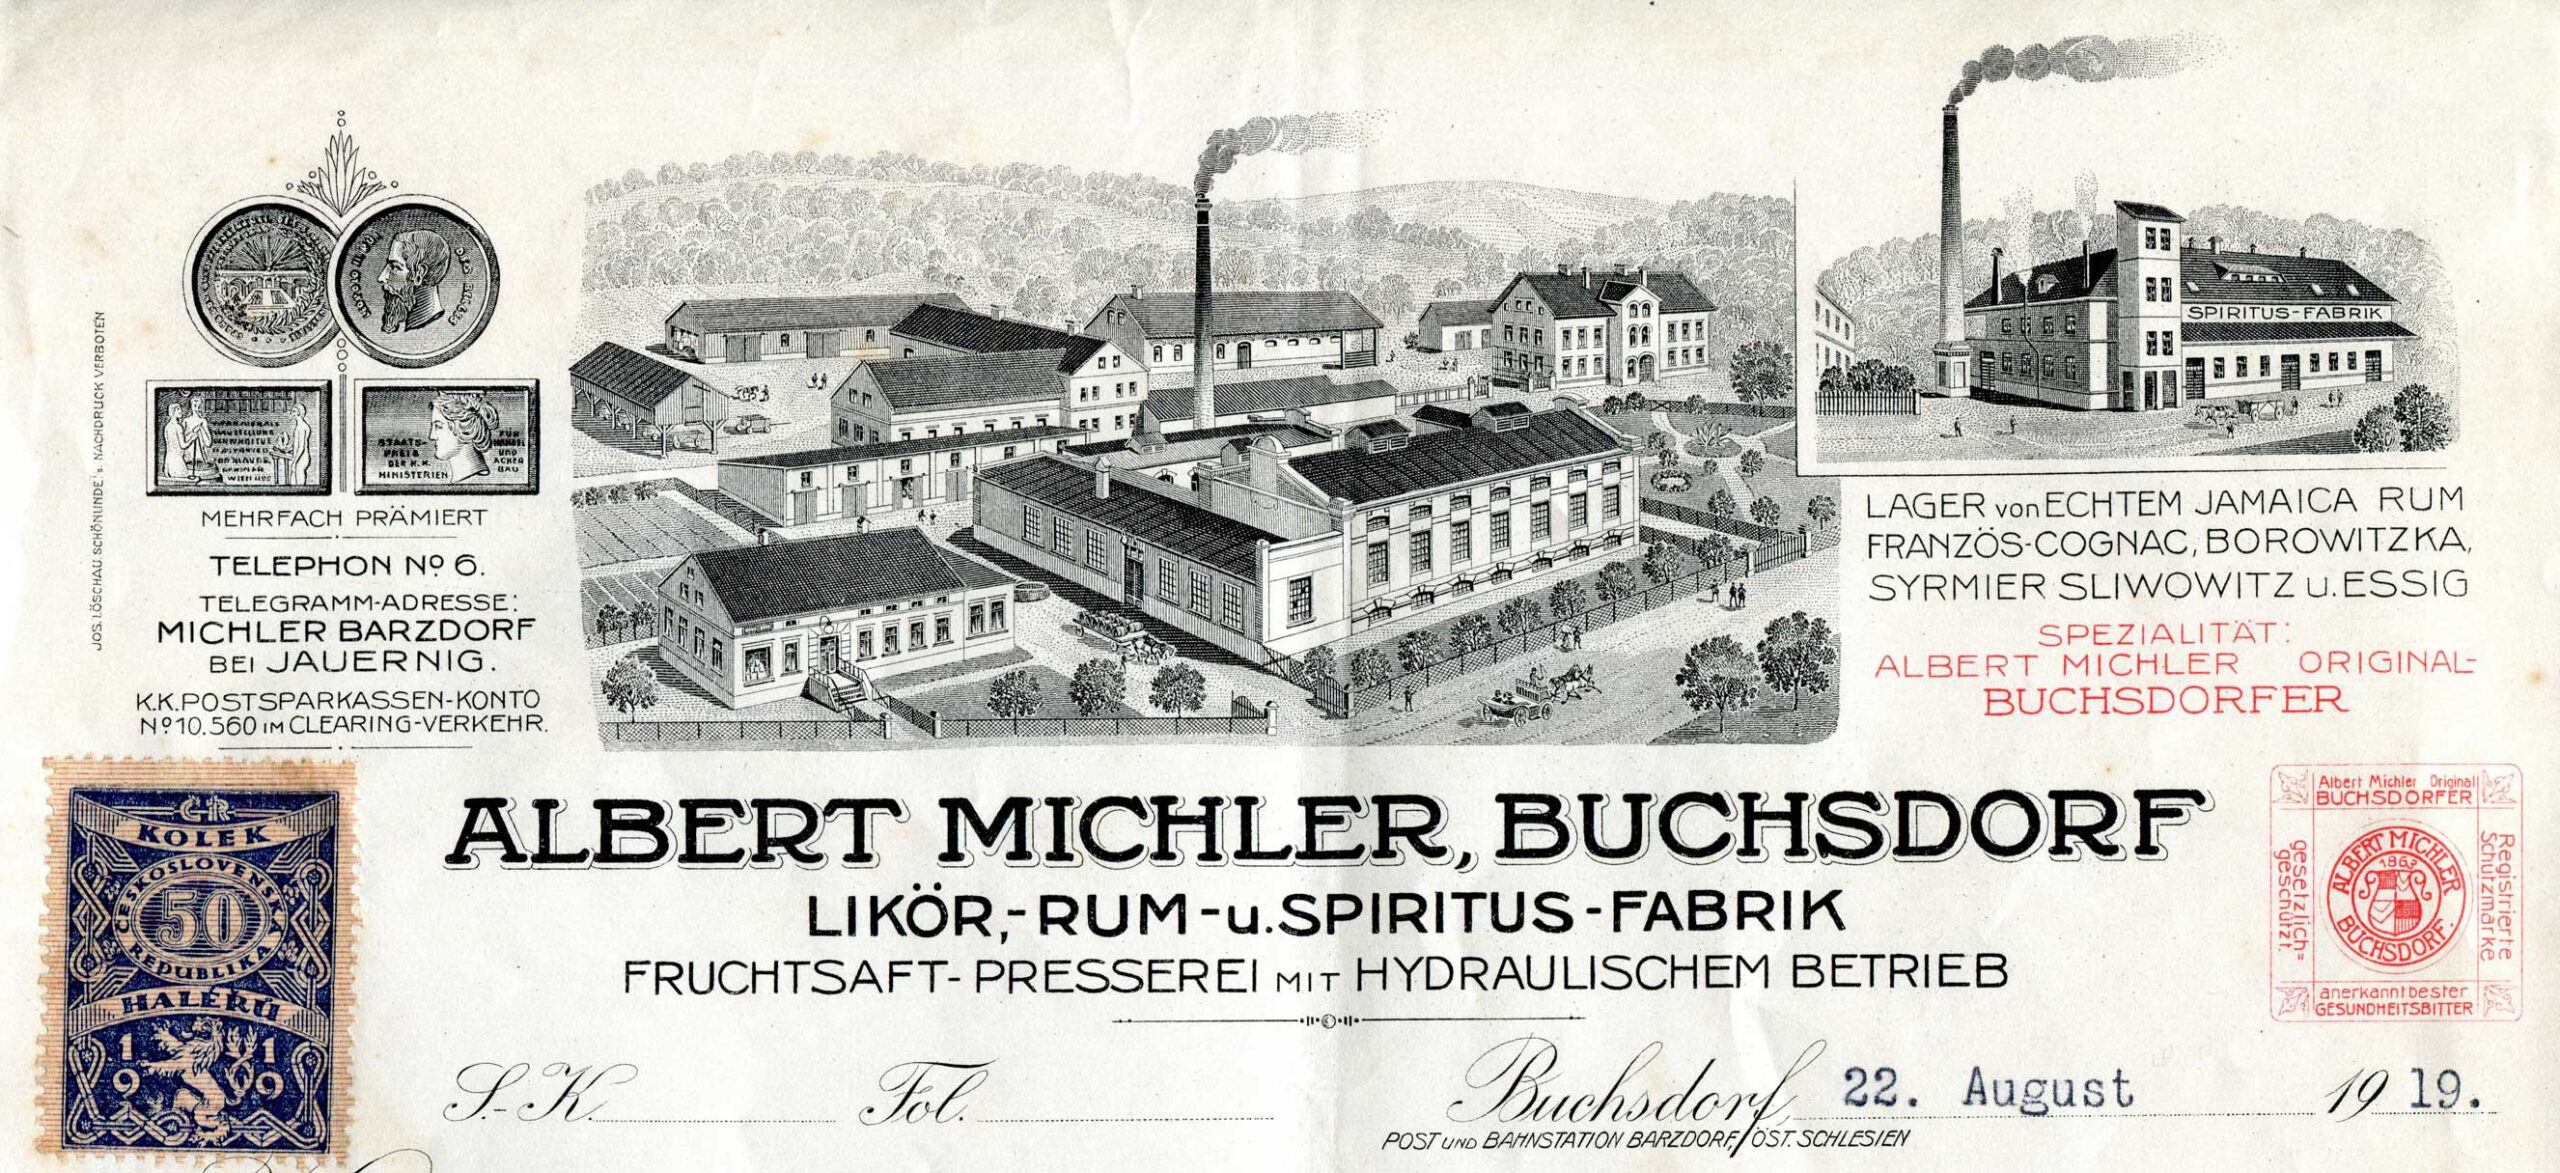 Albert Michler, Buchsdorf - Likör, rum, spiritus fabrik, záhlavie faktúry z roku 1919